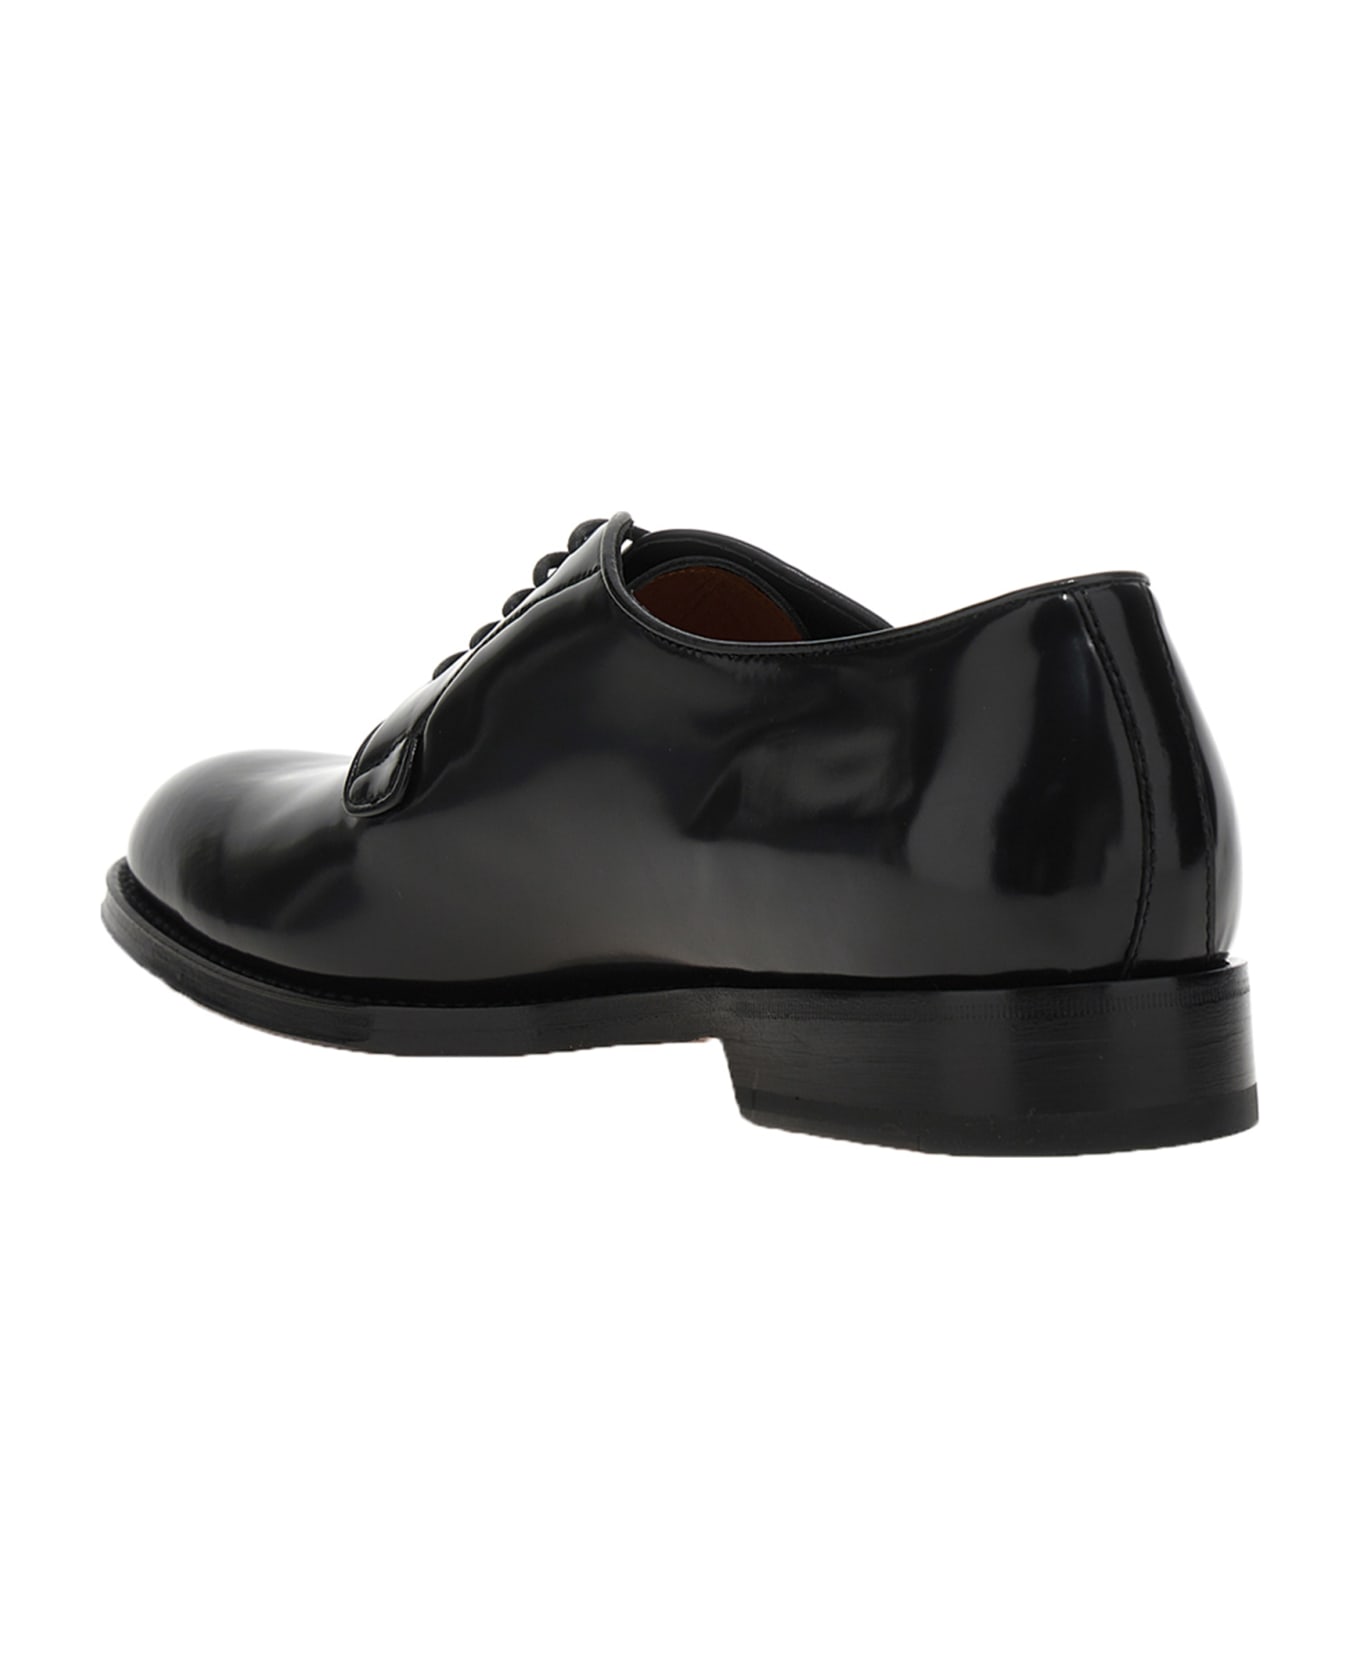 Santoni Shiny Leather Lace Up Shoes - Black  